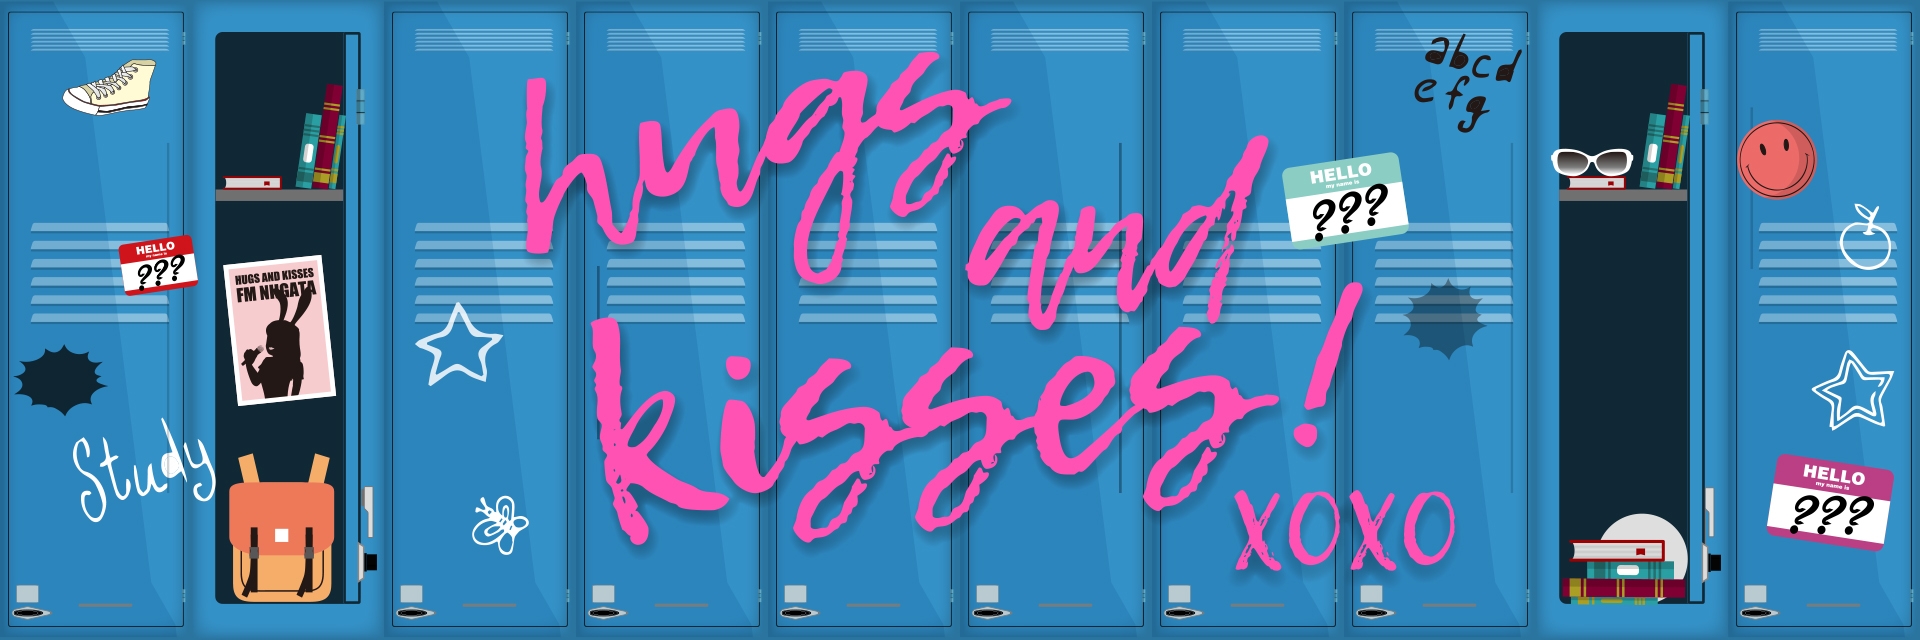 XOXO hugs and kisses